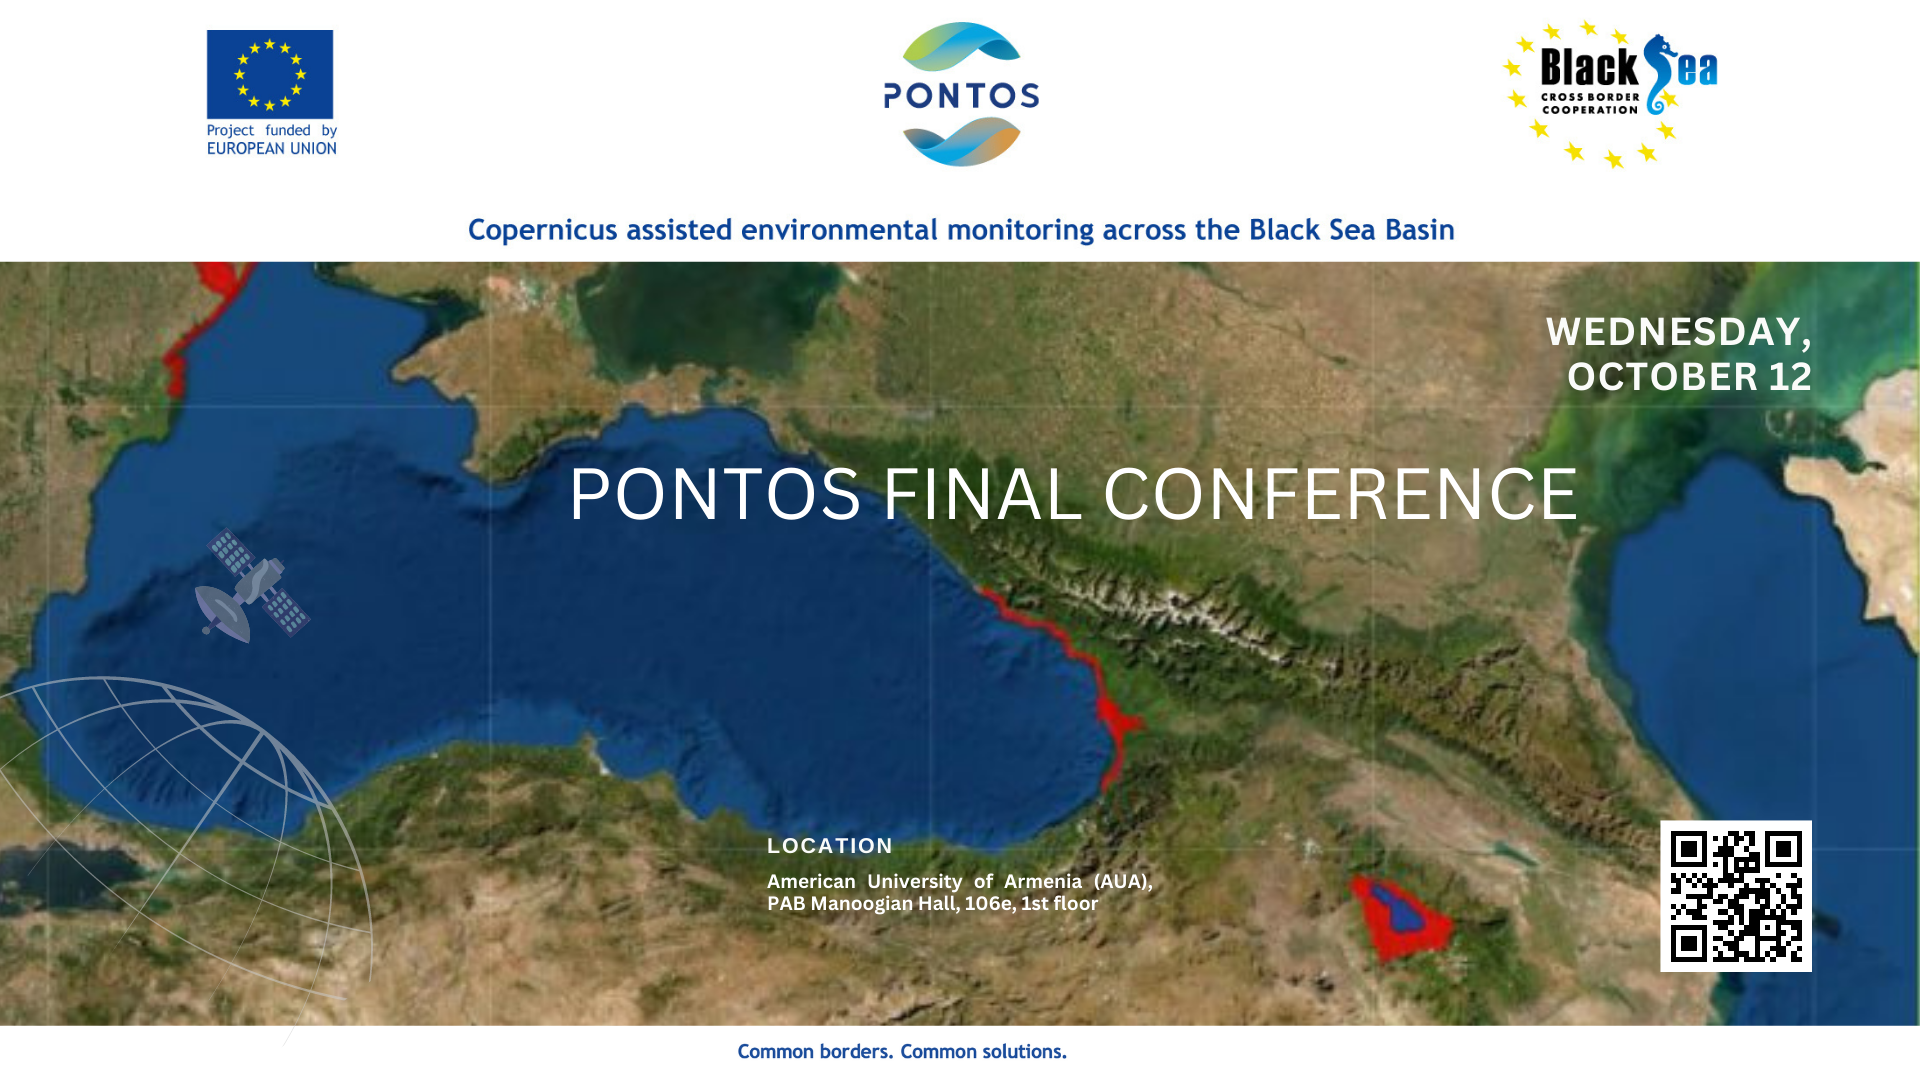 PONTOS Final Conference - AUA Acopian Center for the Environment